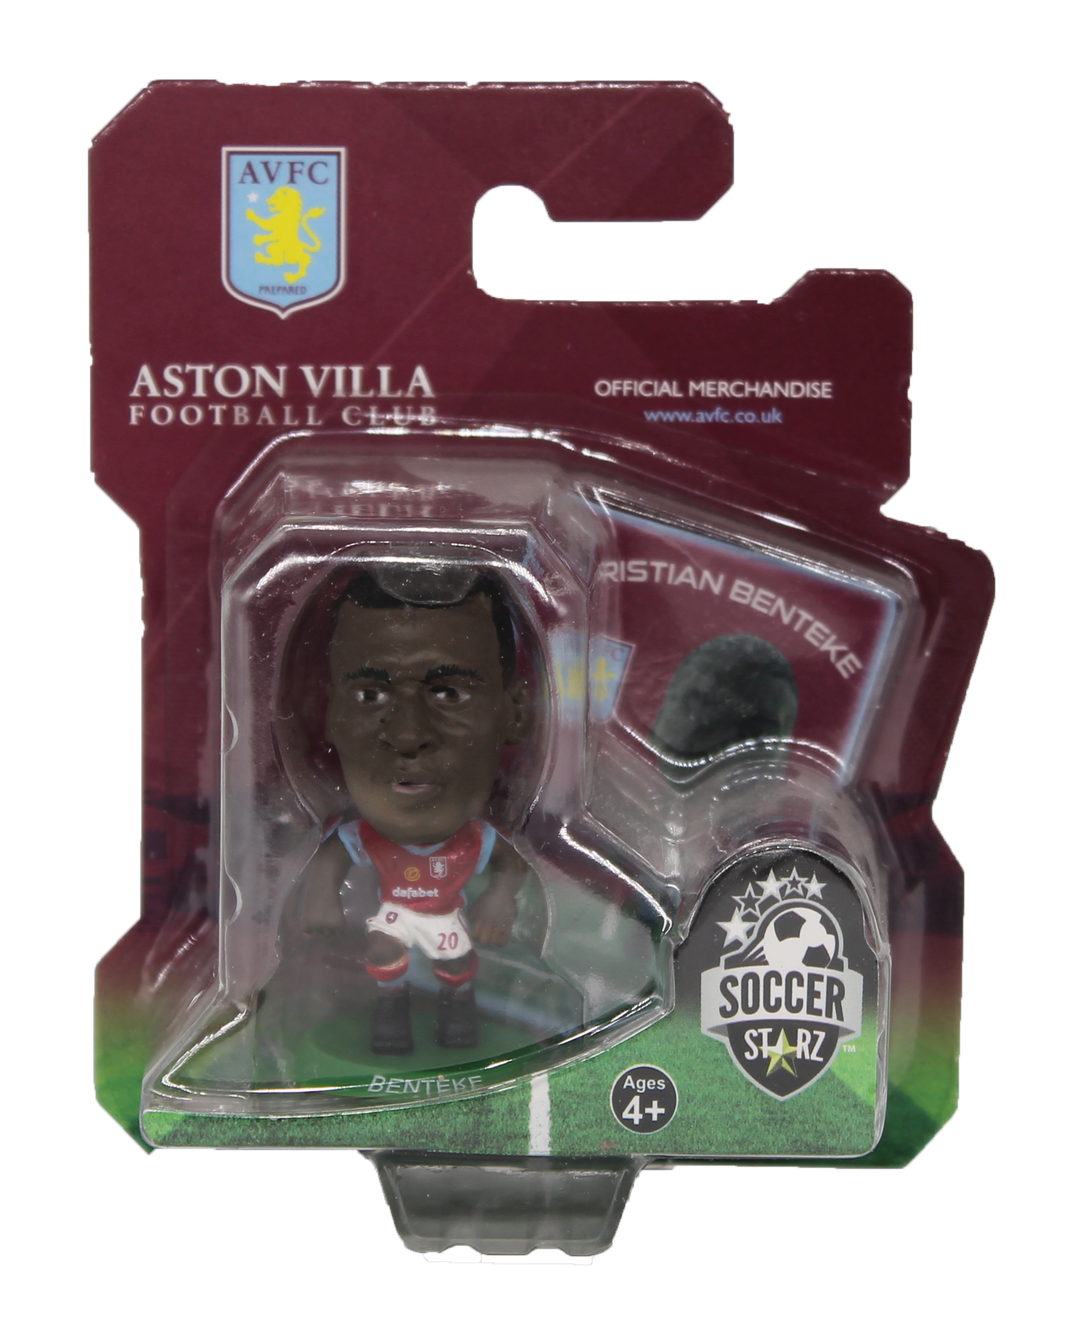 Signed SoccerStarz - Christian Benteke - Aston Villa